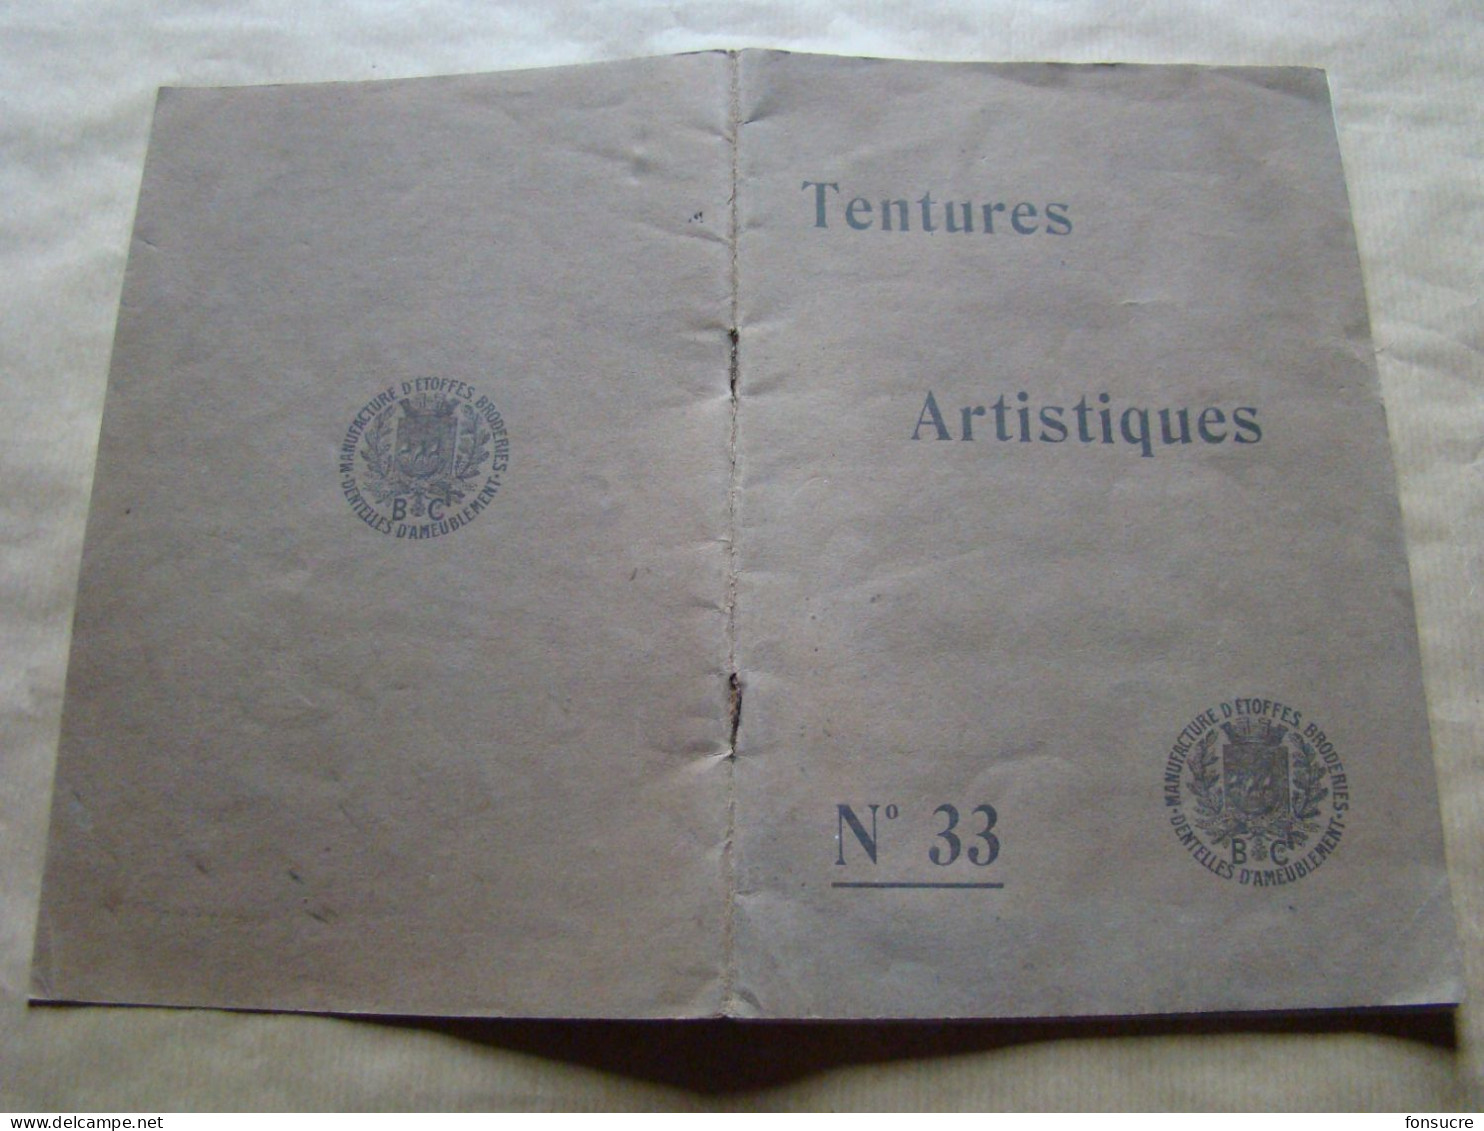 VR20 Catalogue des Tentures Artistiques n°33 BERAUD & Cie Etoffe Broderie Dentelle 24 pages vers 1920